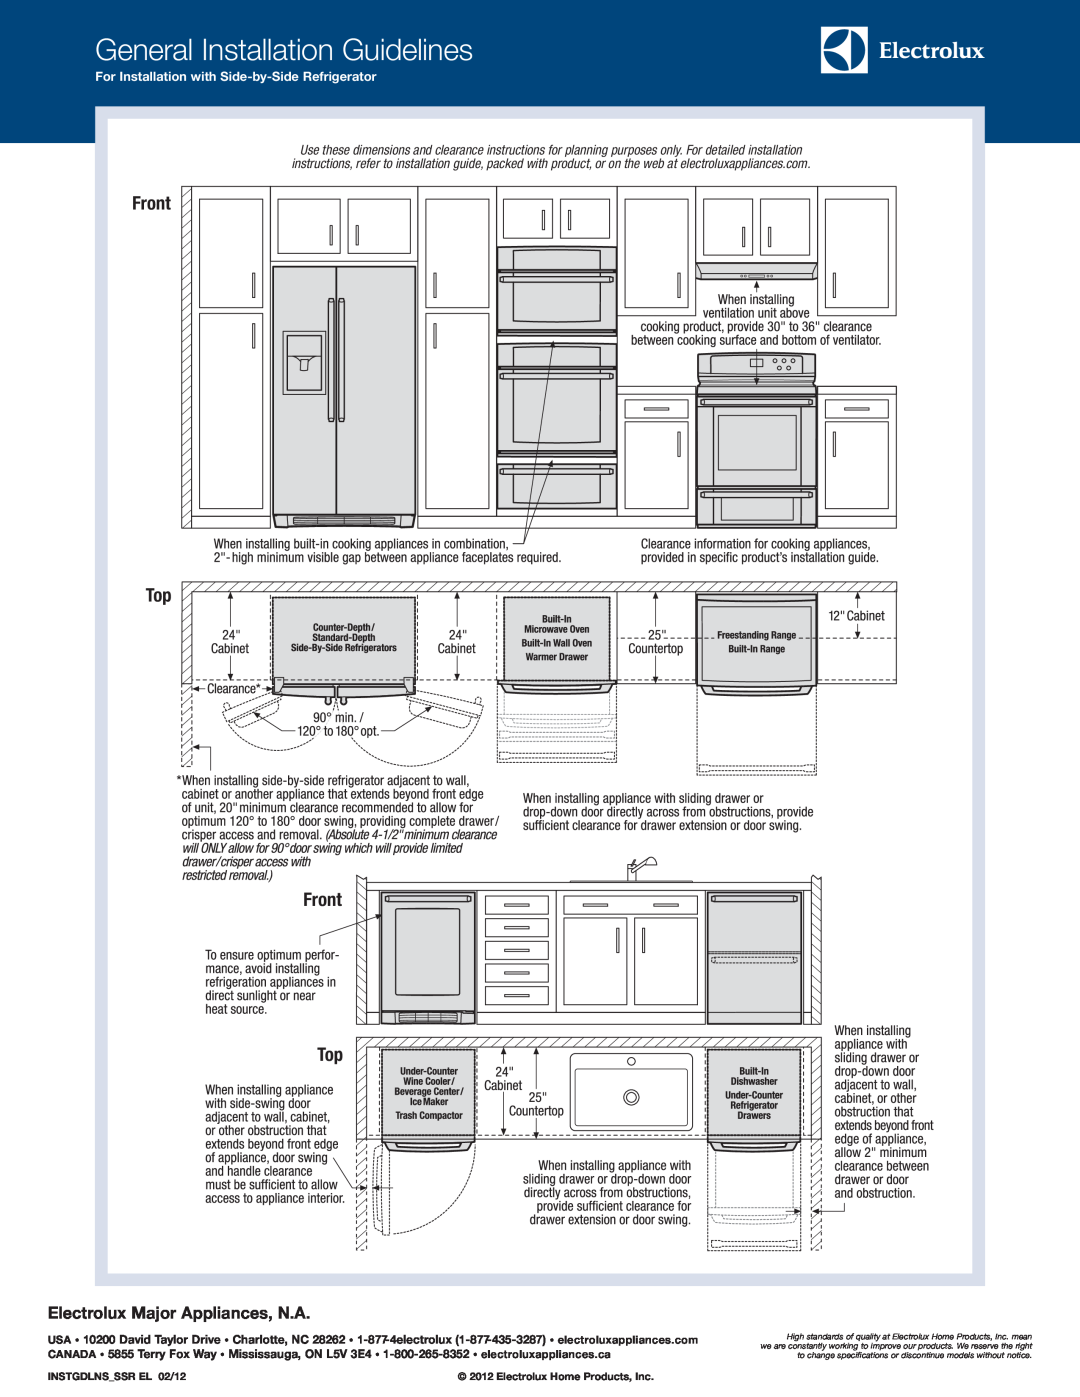 Electrolux EI30IF40L S General Installation Guidelines, Front Top, Electrolux Major Appliances, N.A, INSTGDLNSSSR EL 02/12 